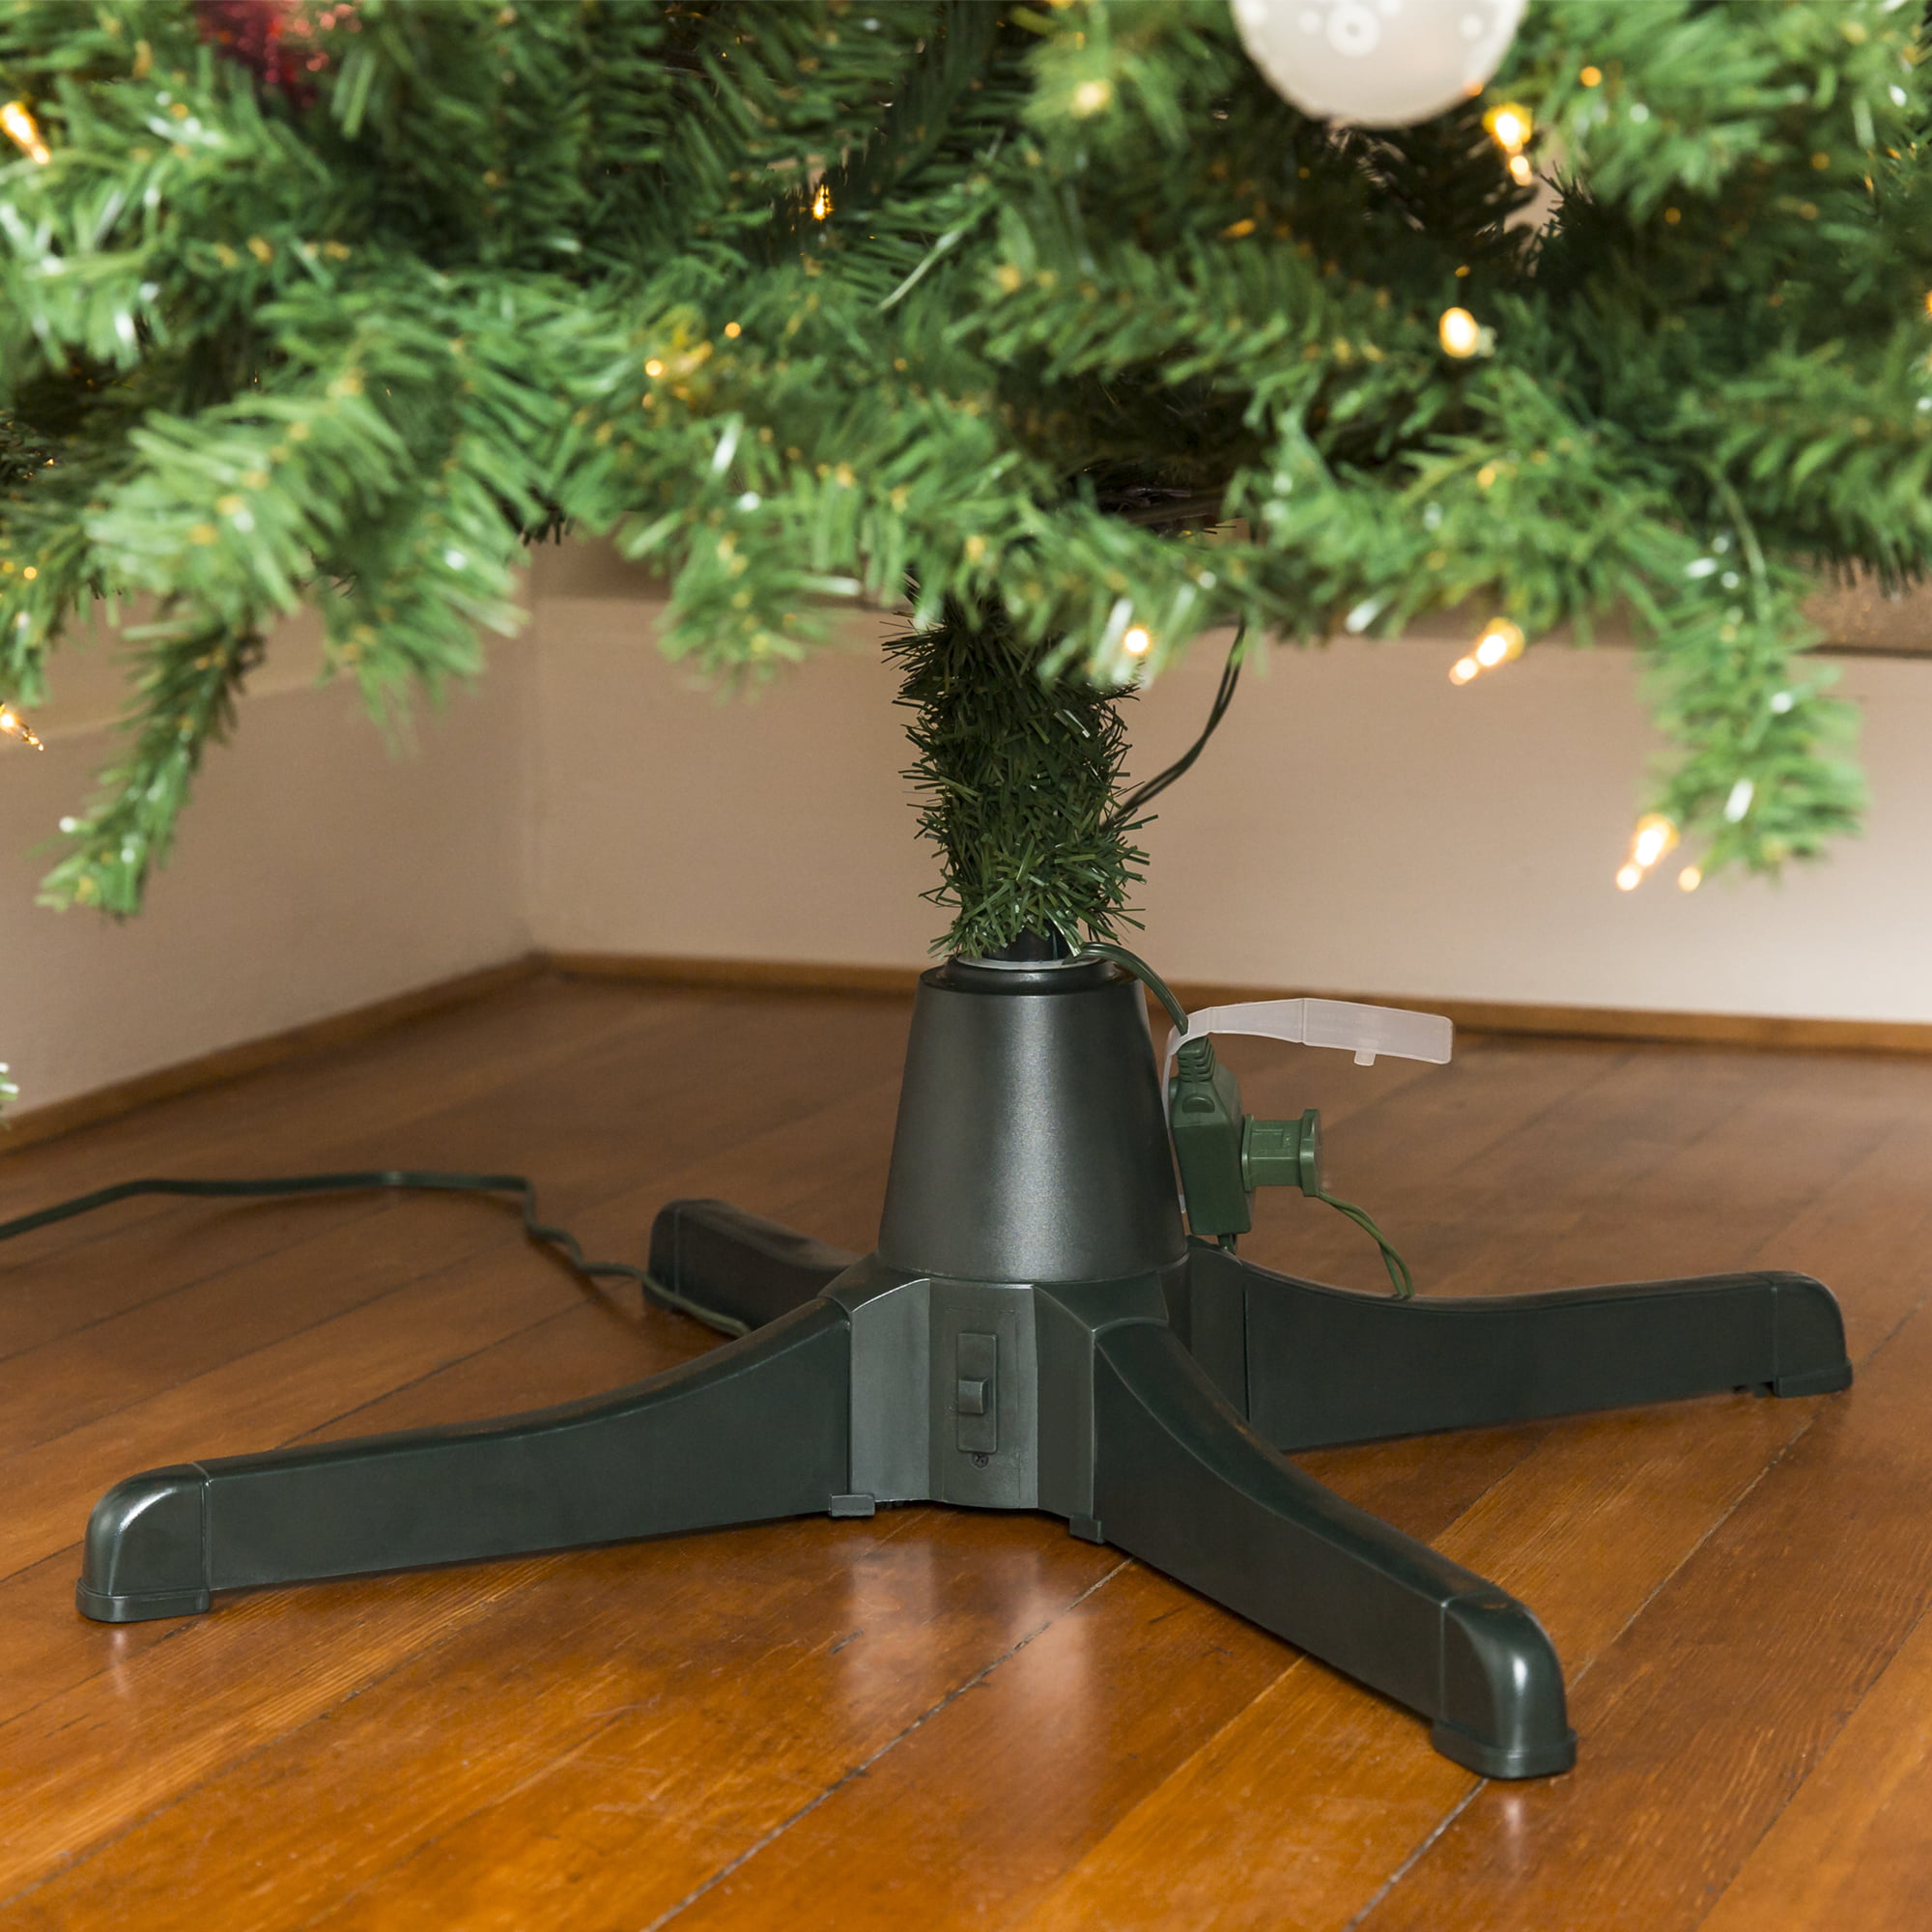 The Holiday Aisle Christmas Rotating Tree Stand 